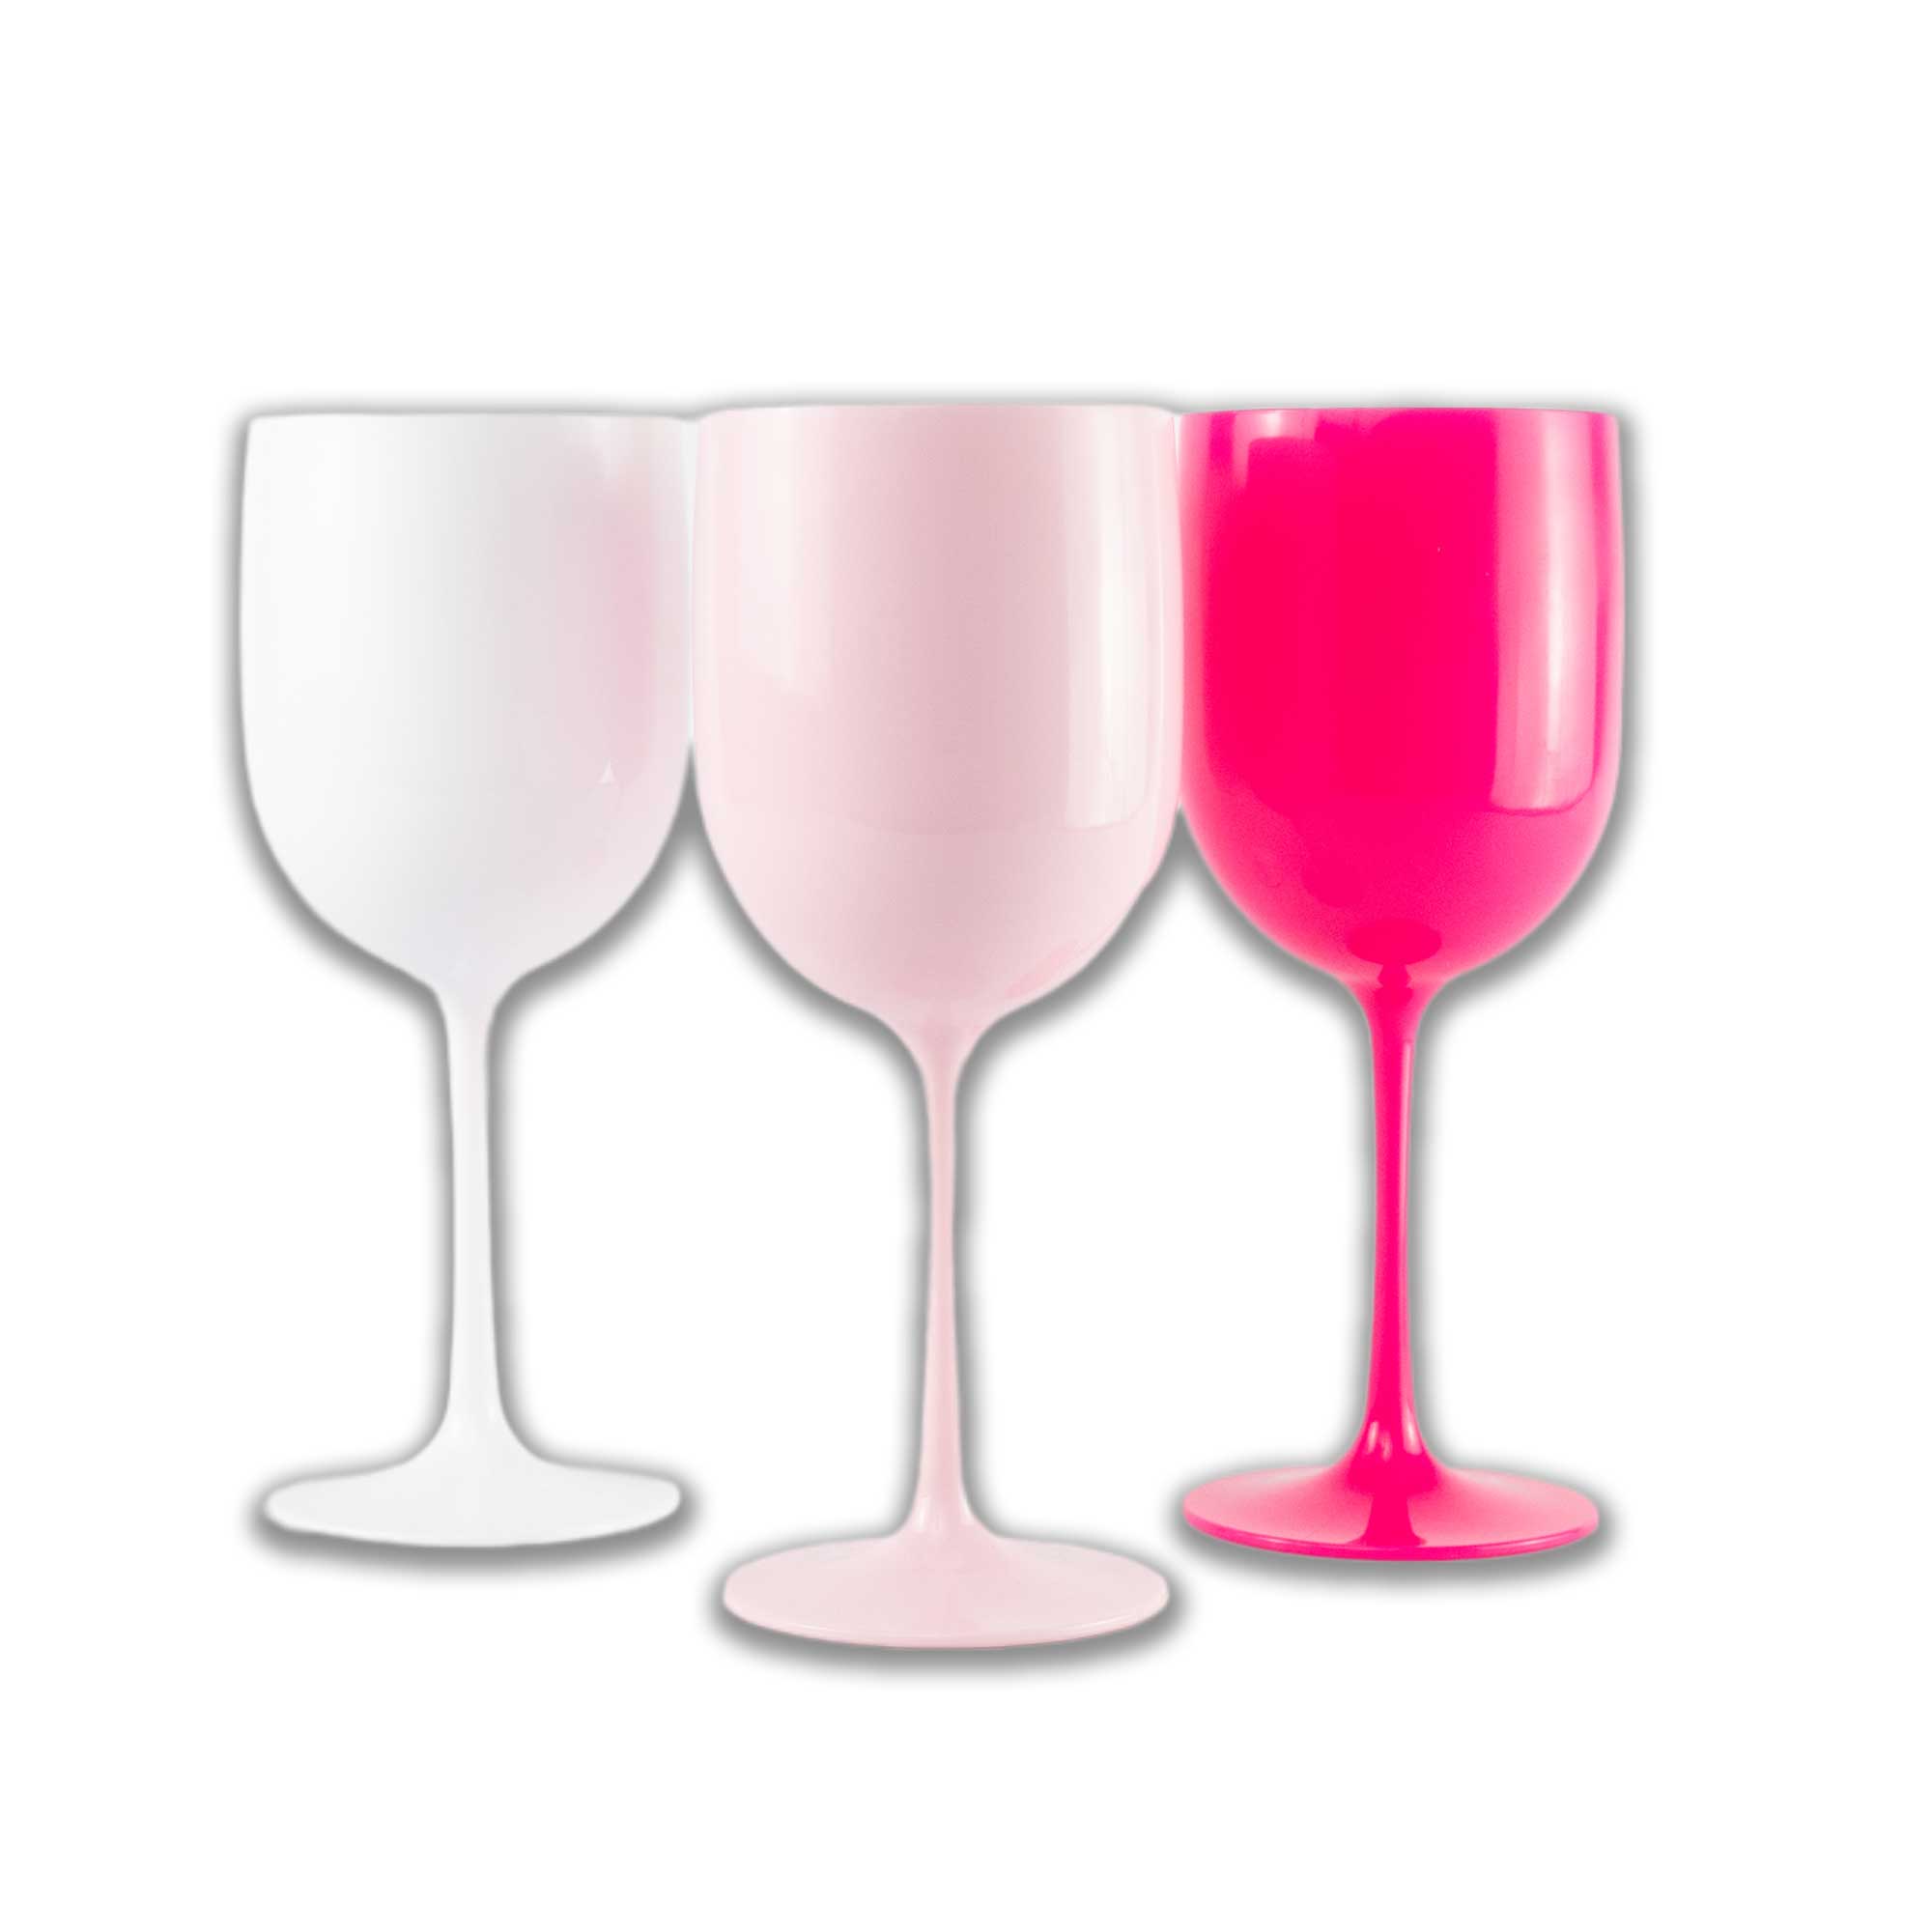 Breakproof wine glasses - set of 4